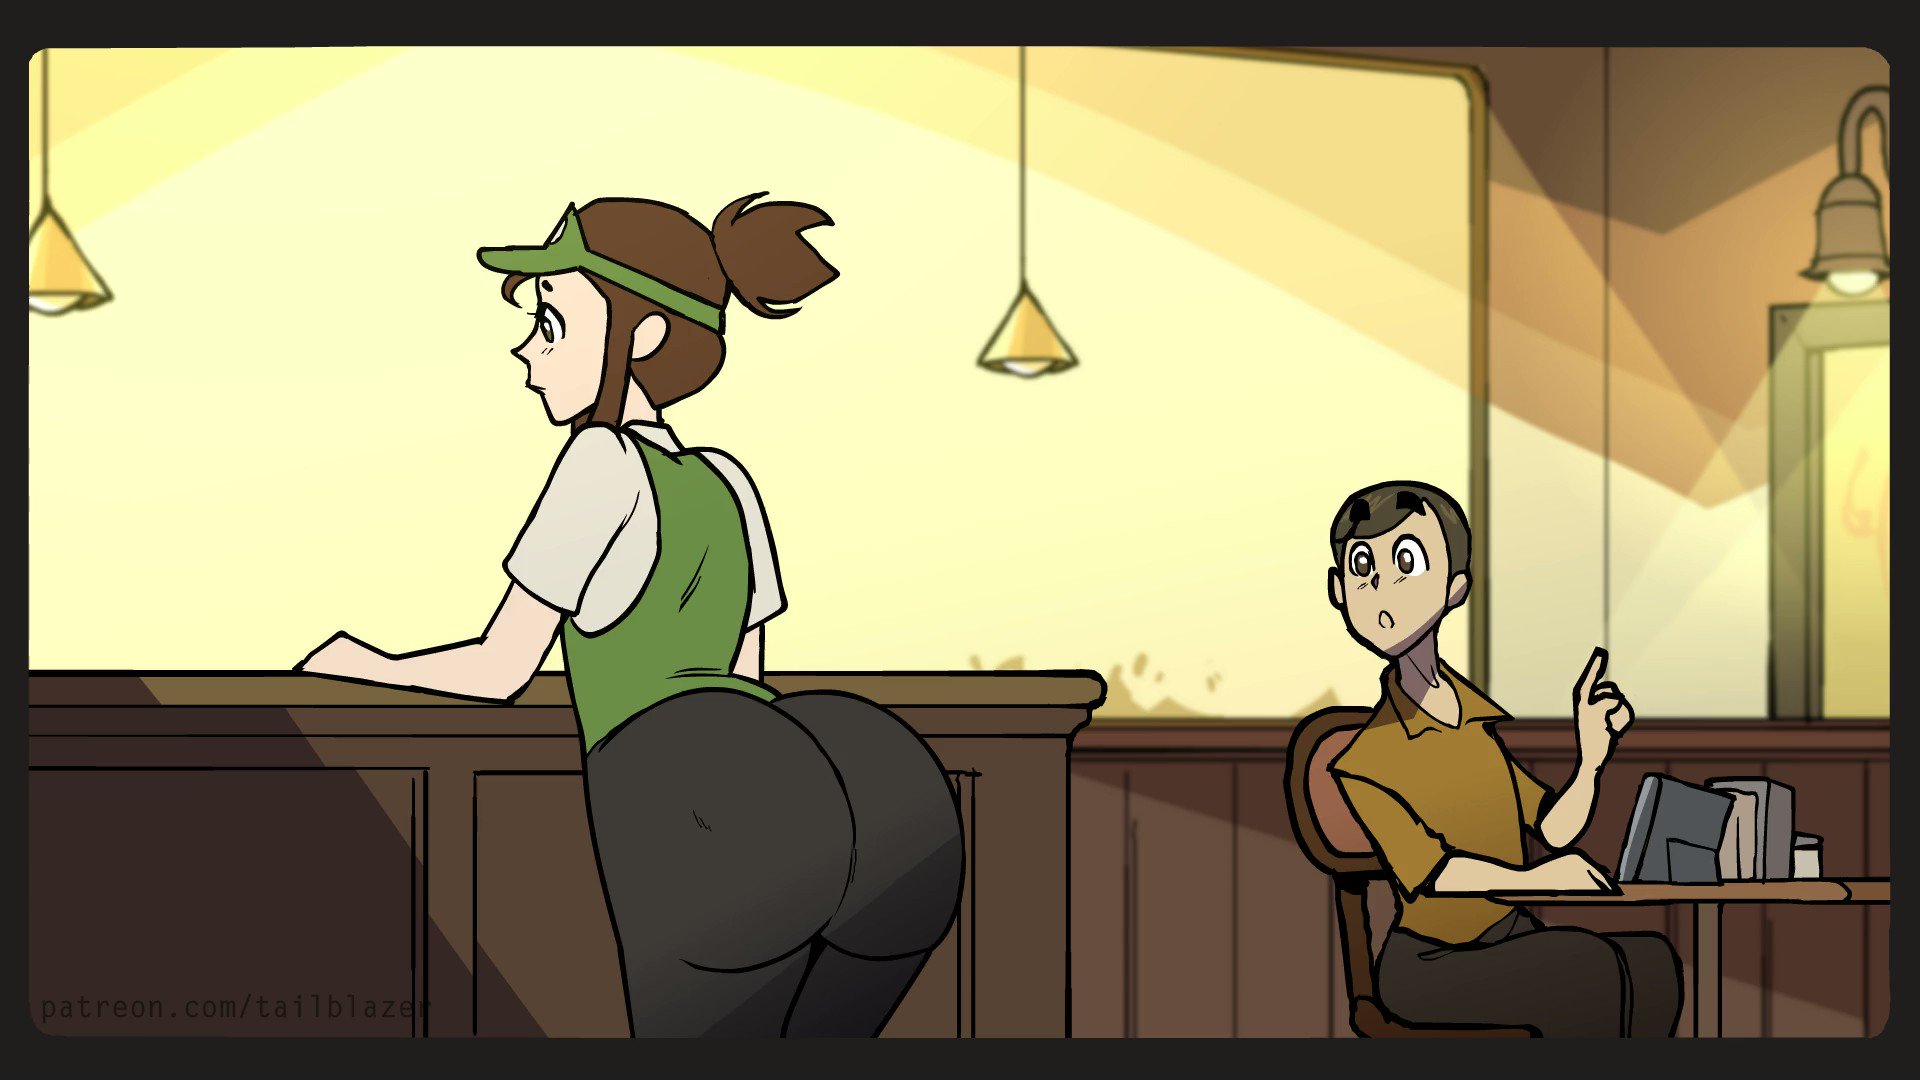 Tail-blazer bombshell barista